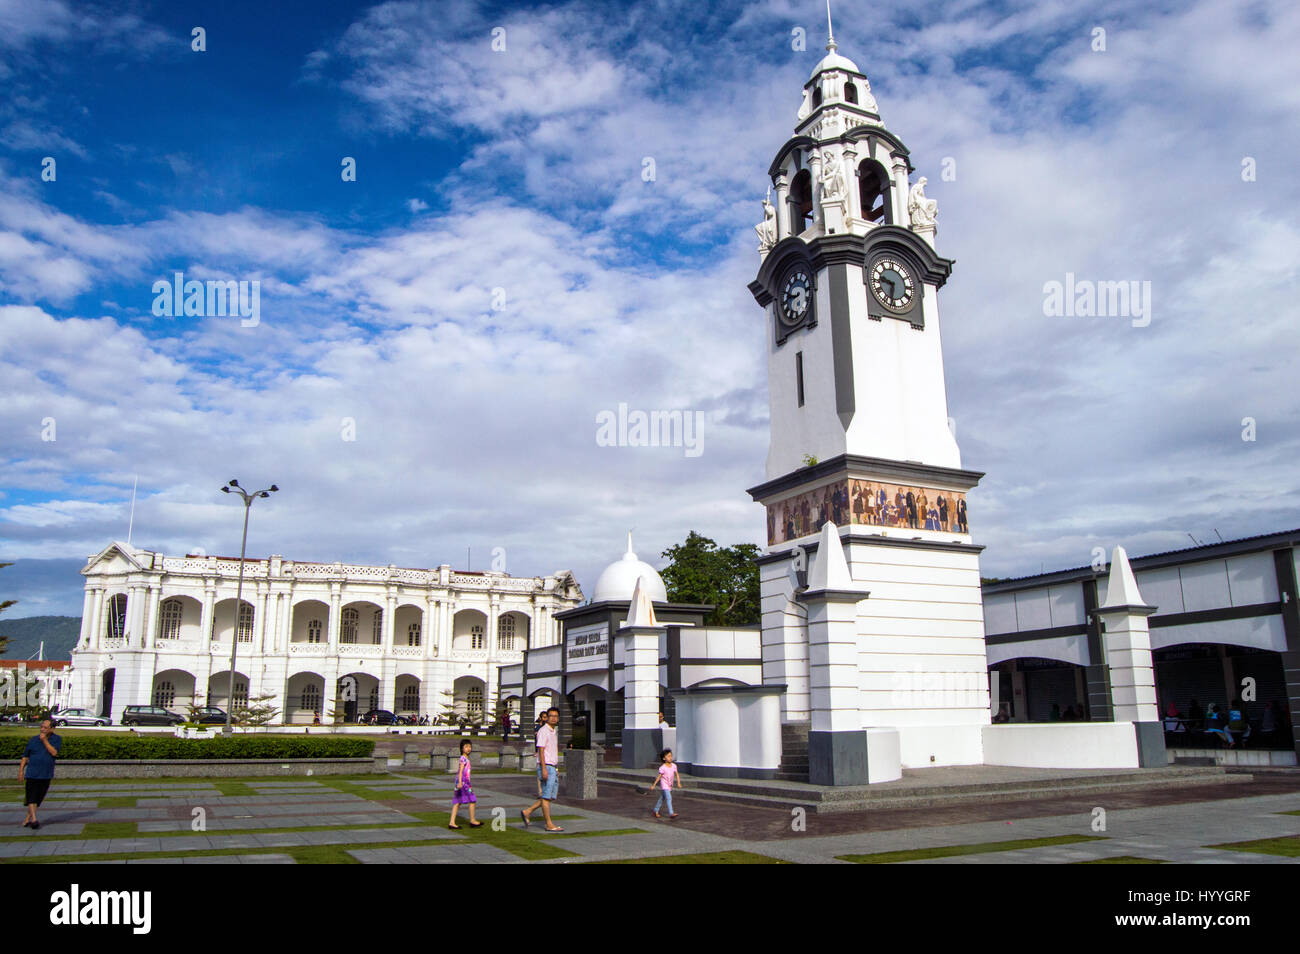 Birch Memorial clock tower and Town Hall, Ipoh, Perak, Malaysia Stock Photo